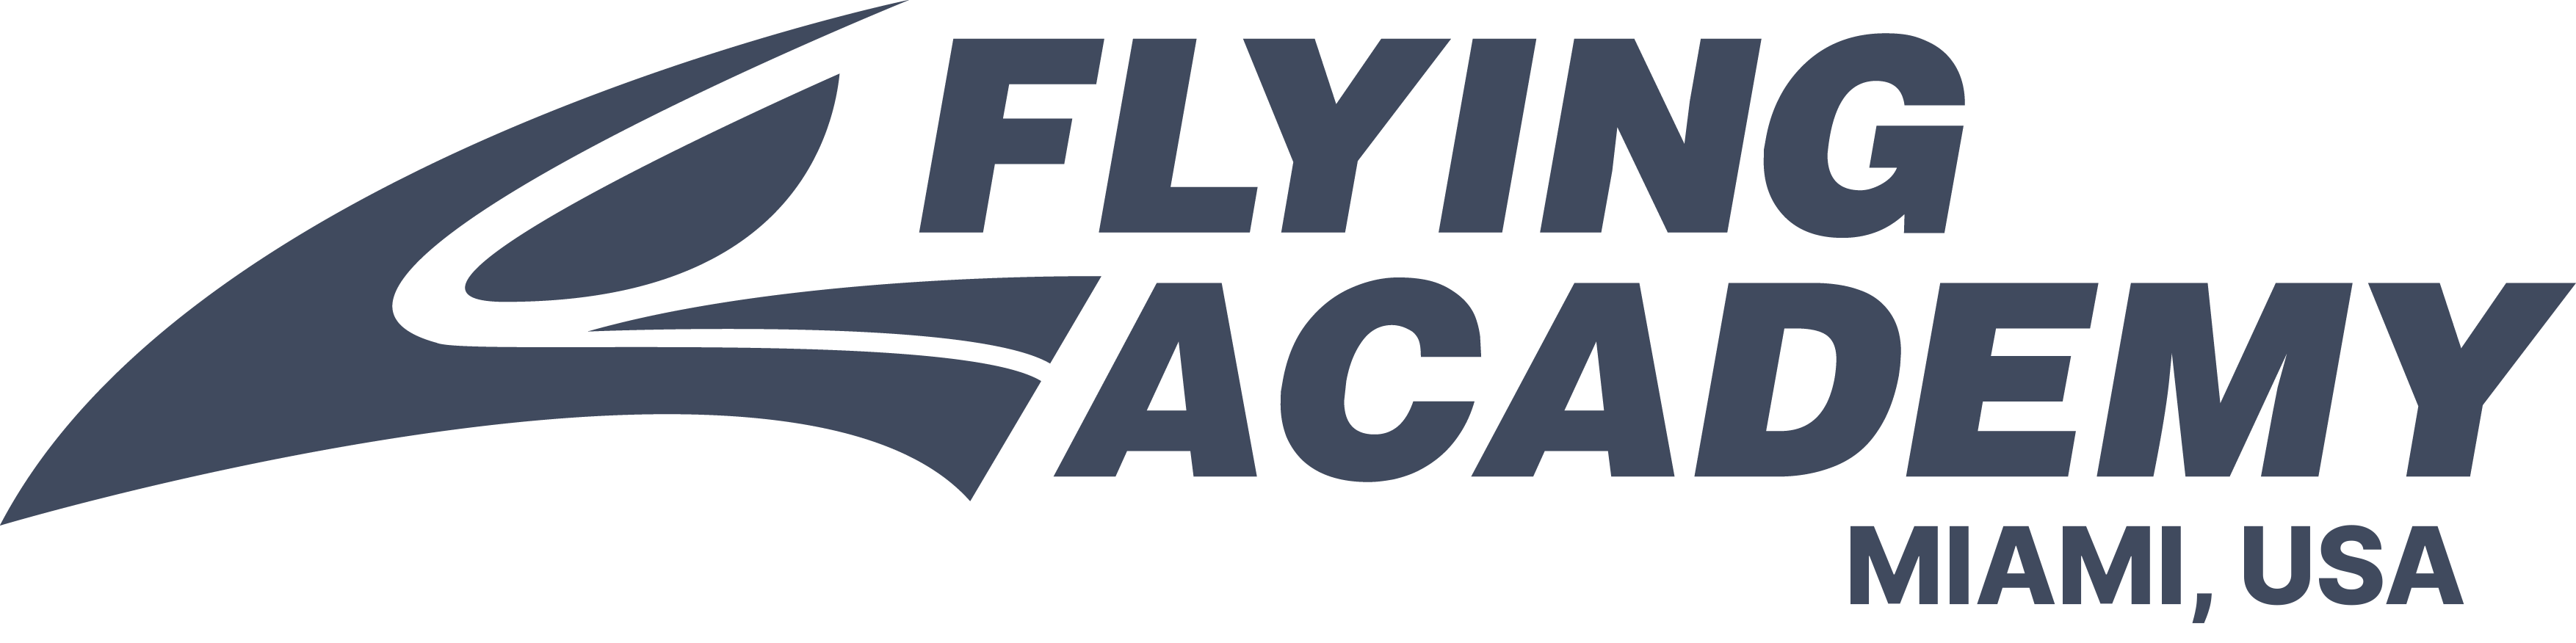 Flying Academy Miami | Professional Pilot Training